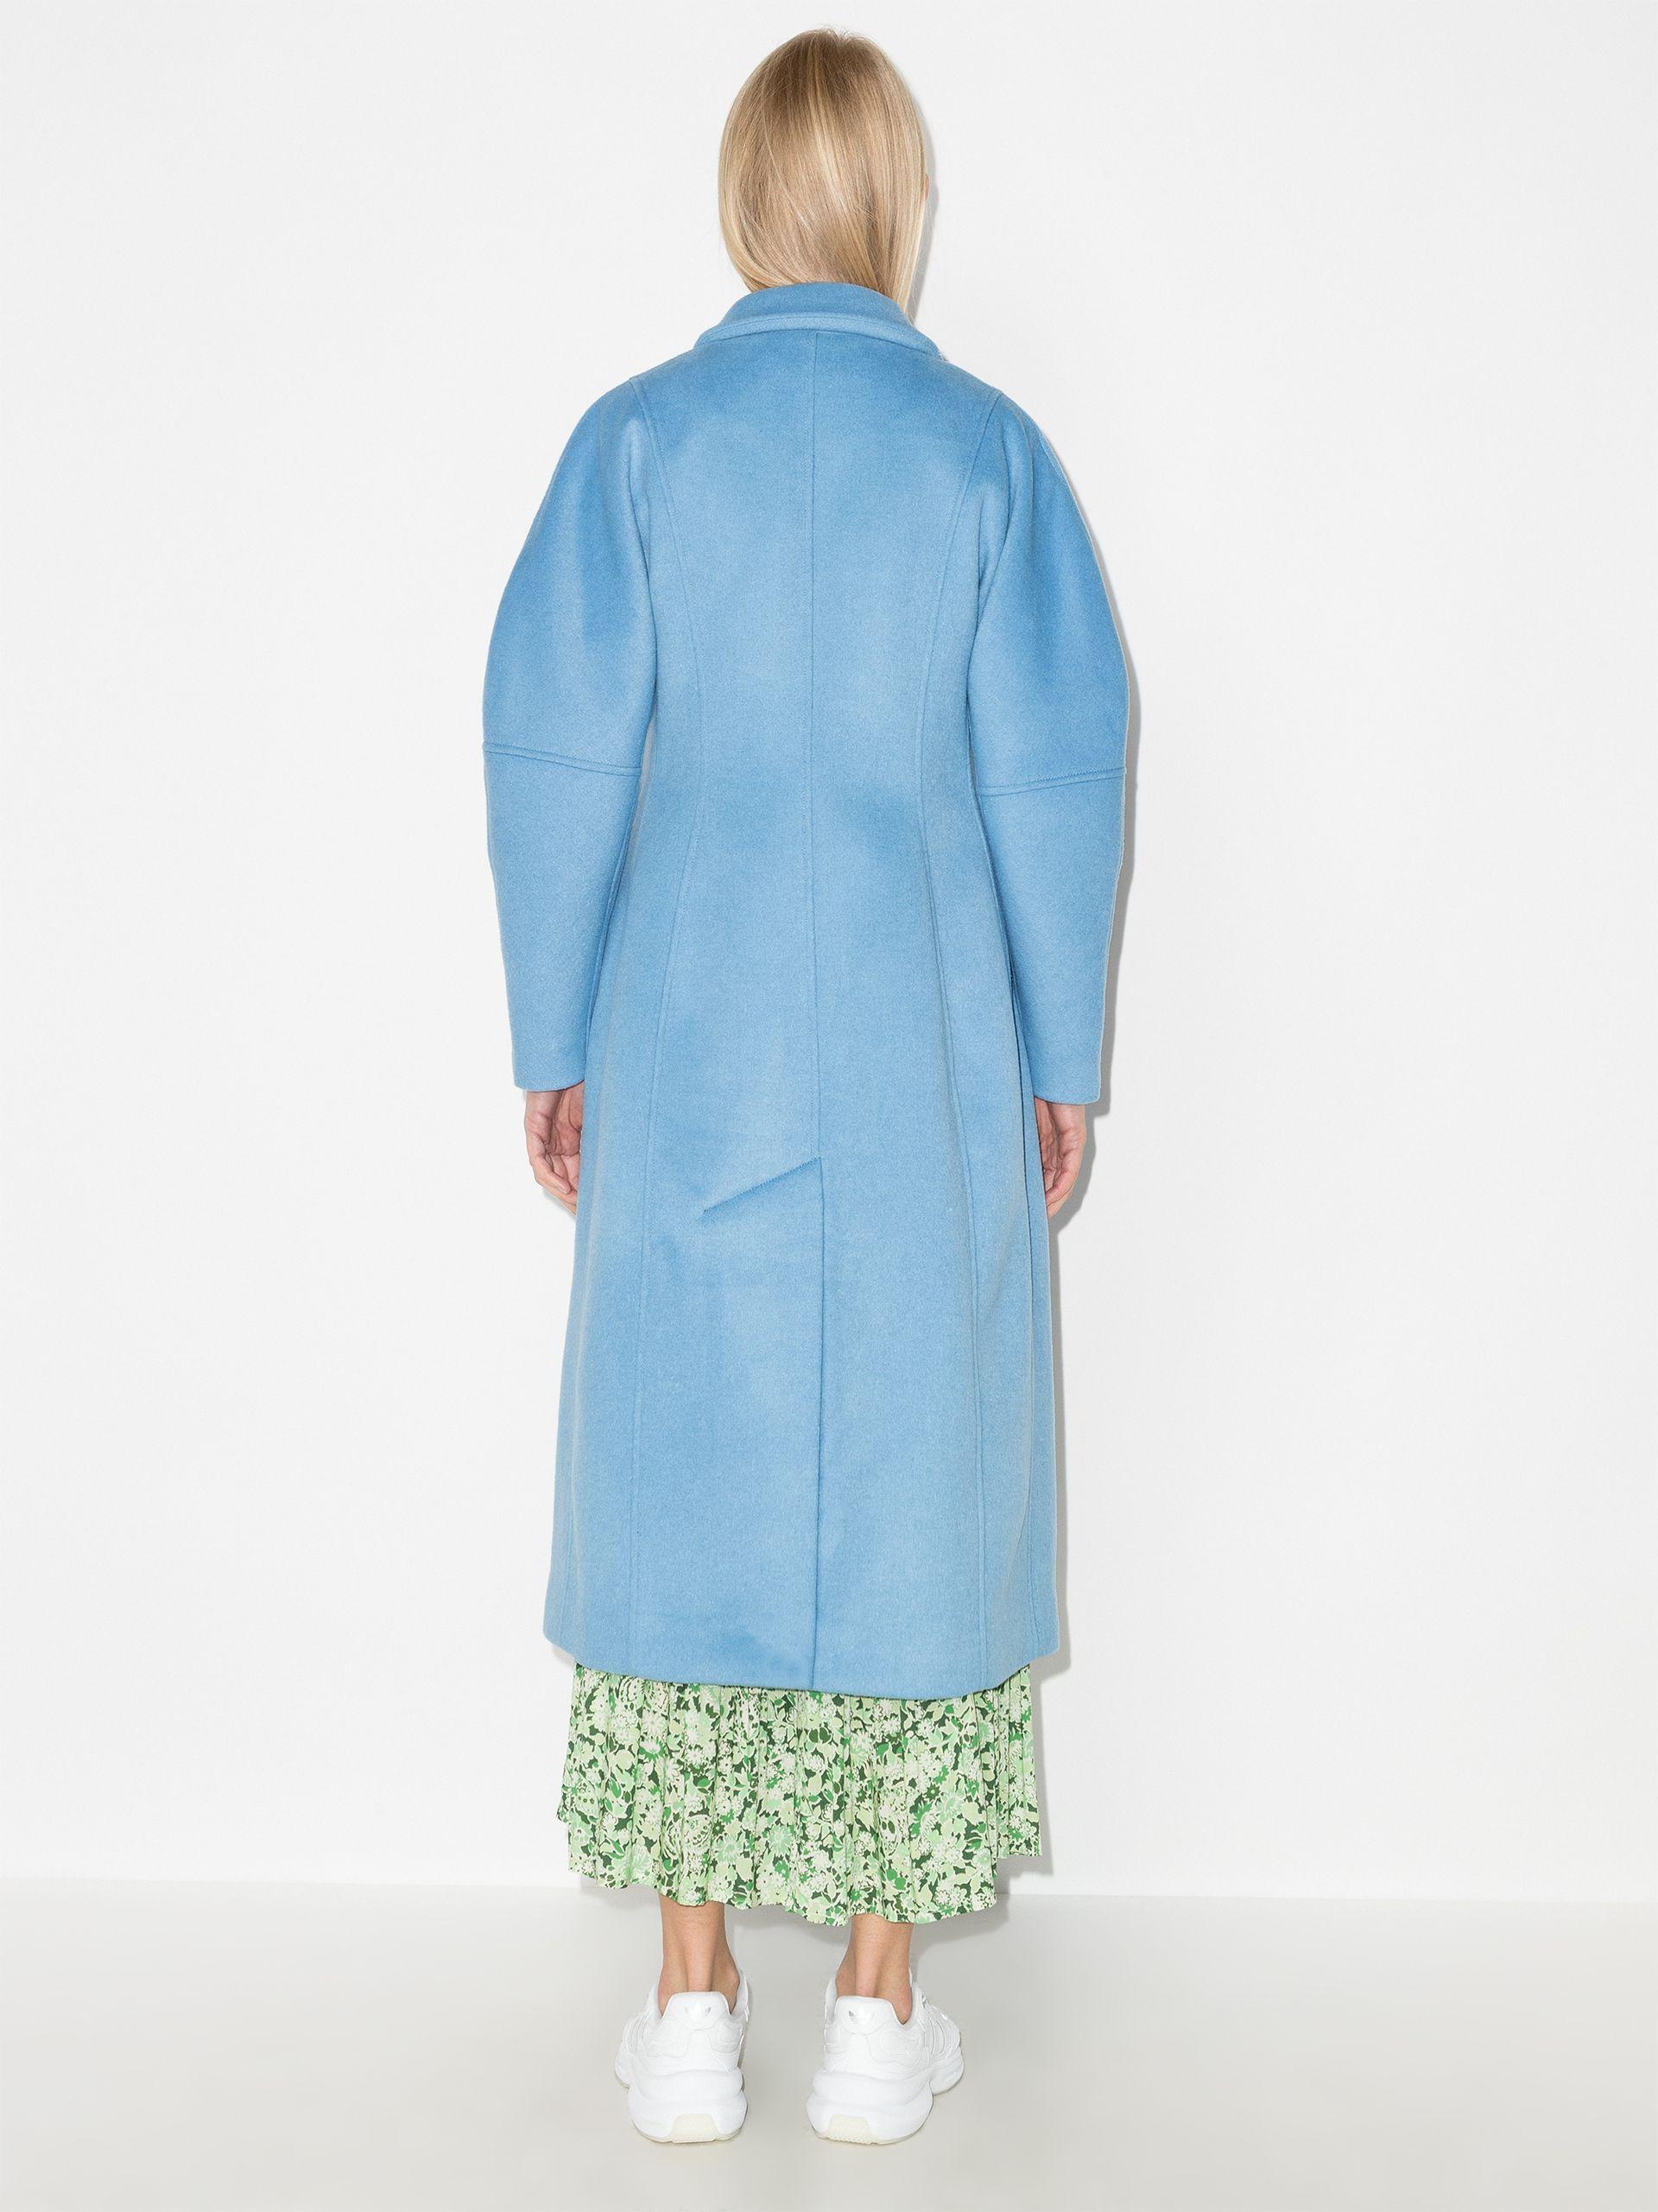 Ganni Single-breasted Wool Coat in Blue | Lyst